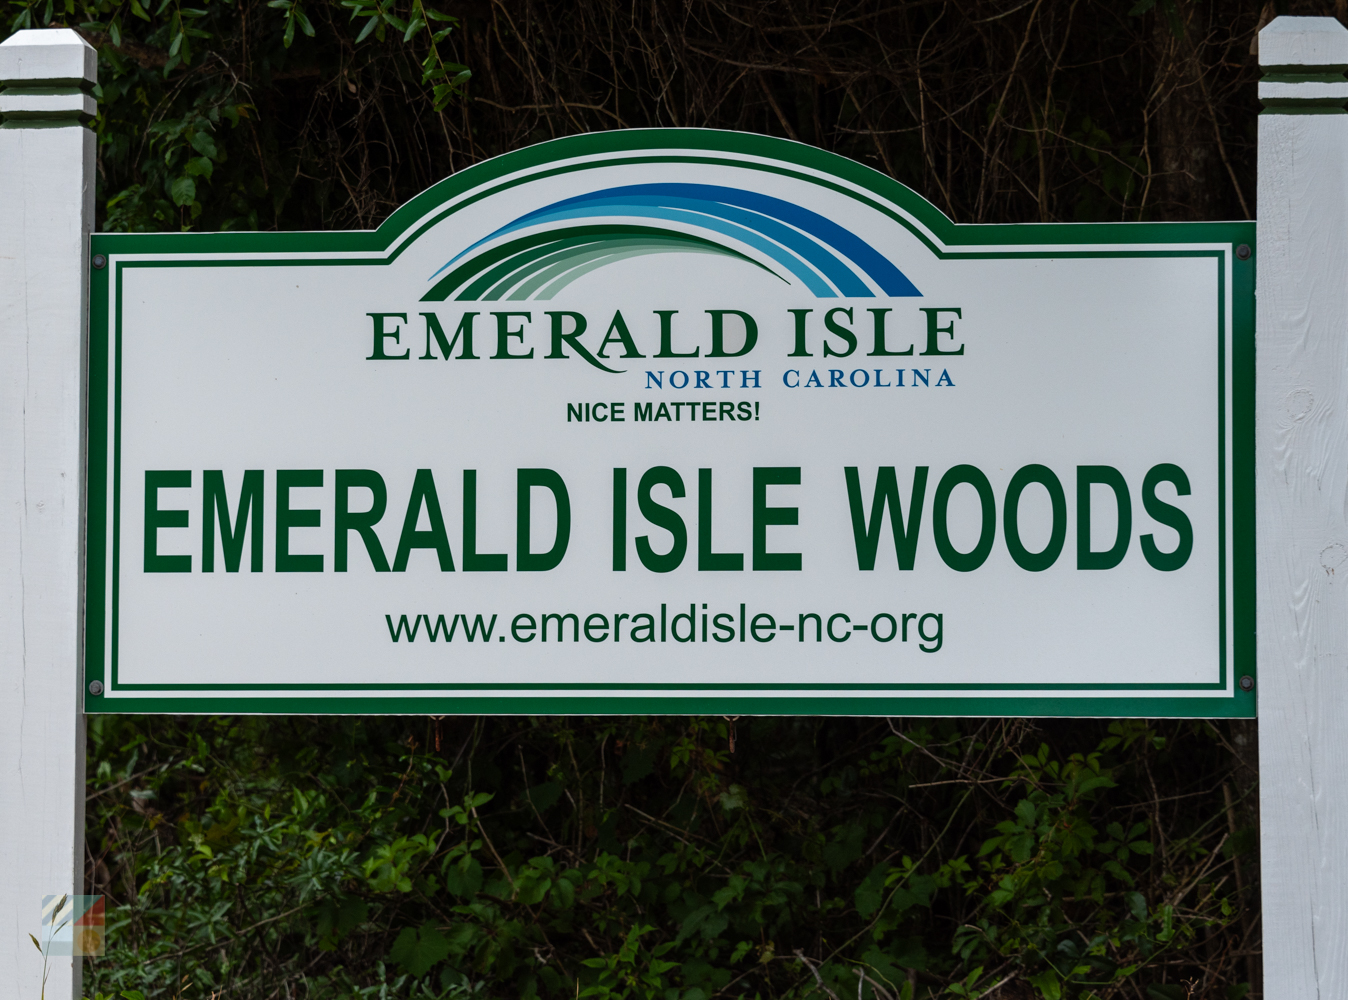 Emerald Isle Woods